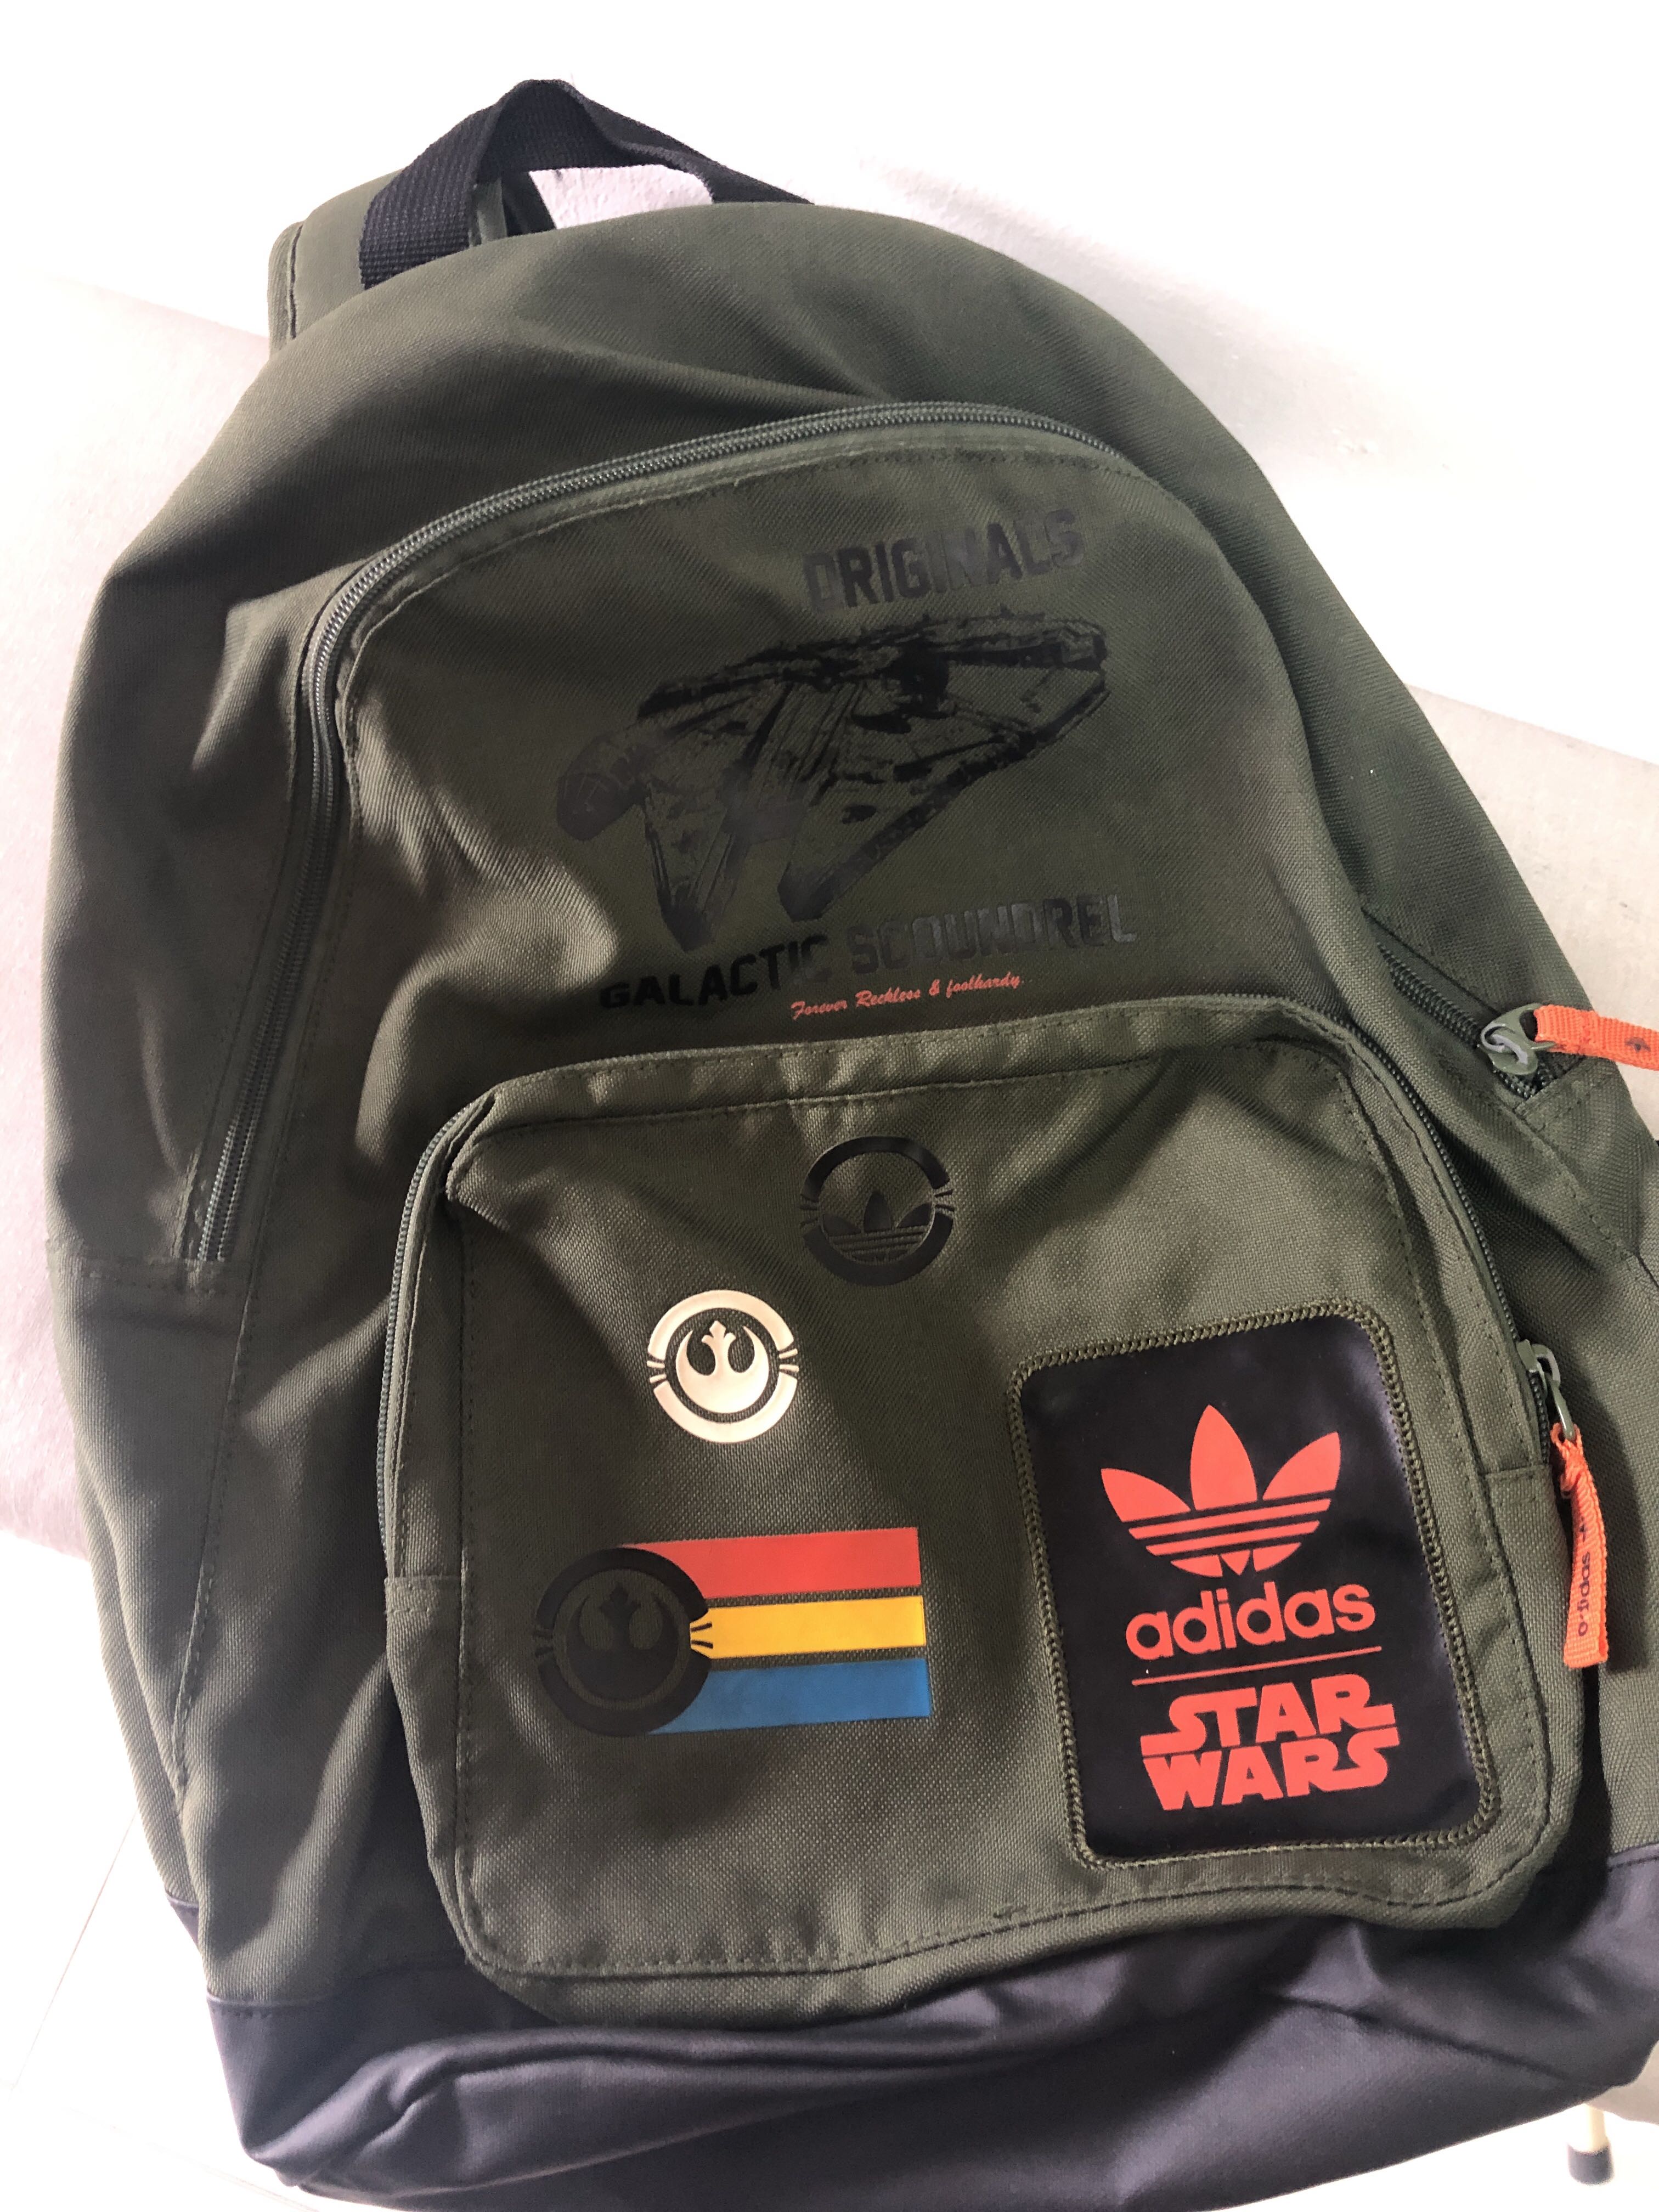 adidas star wars bag